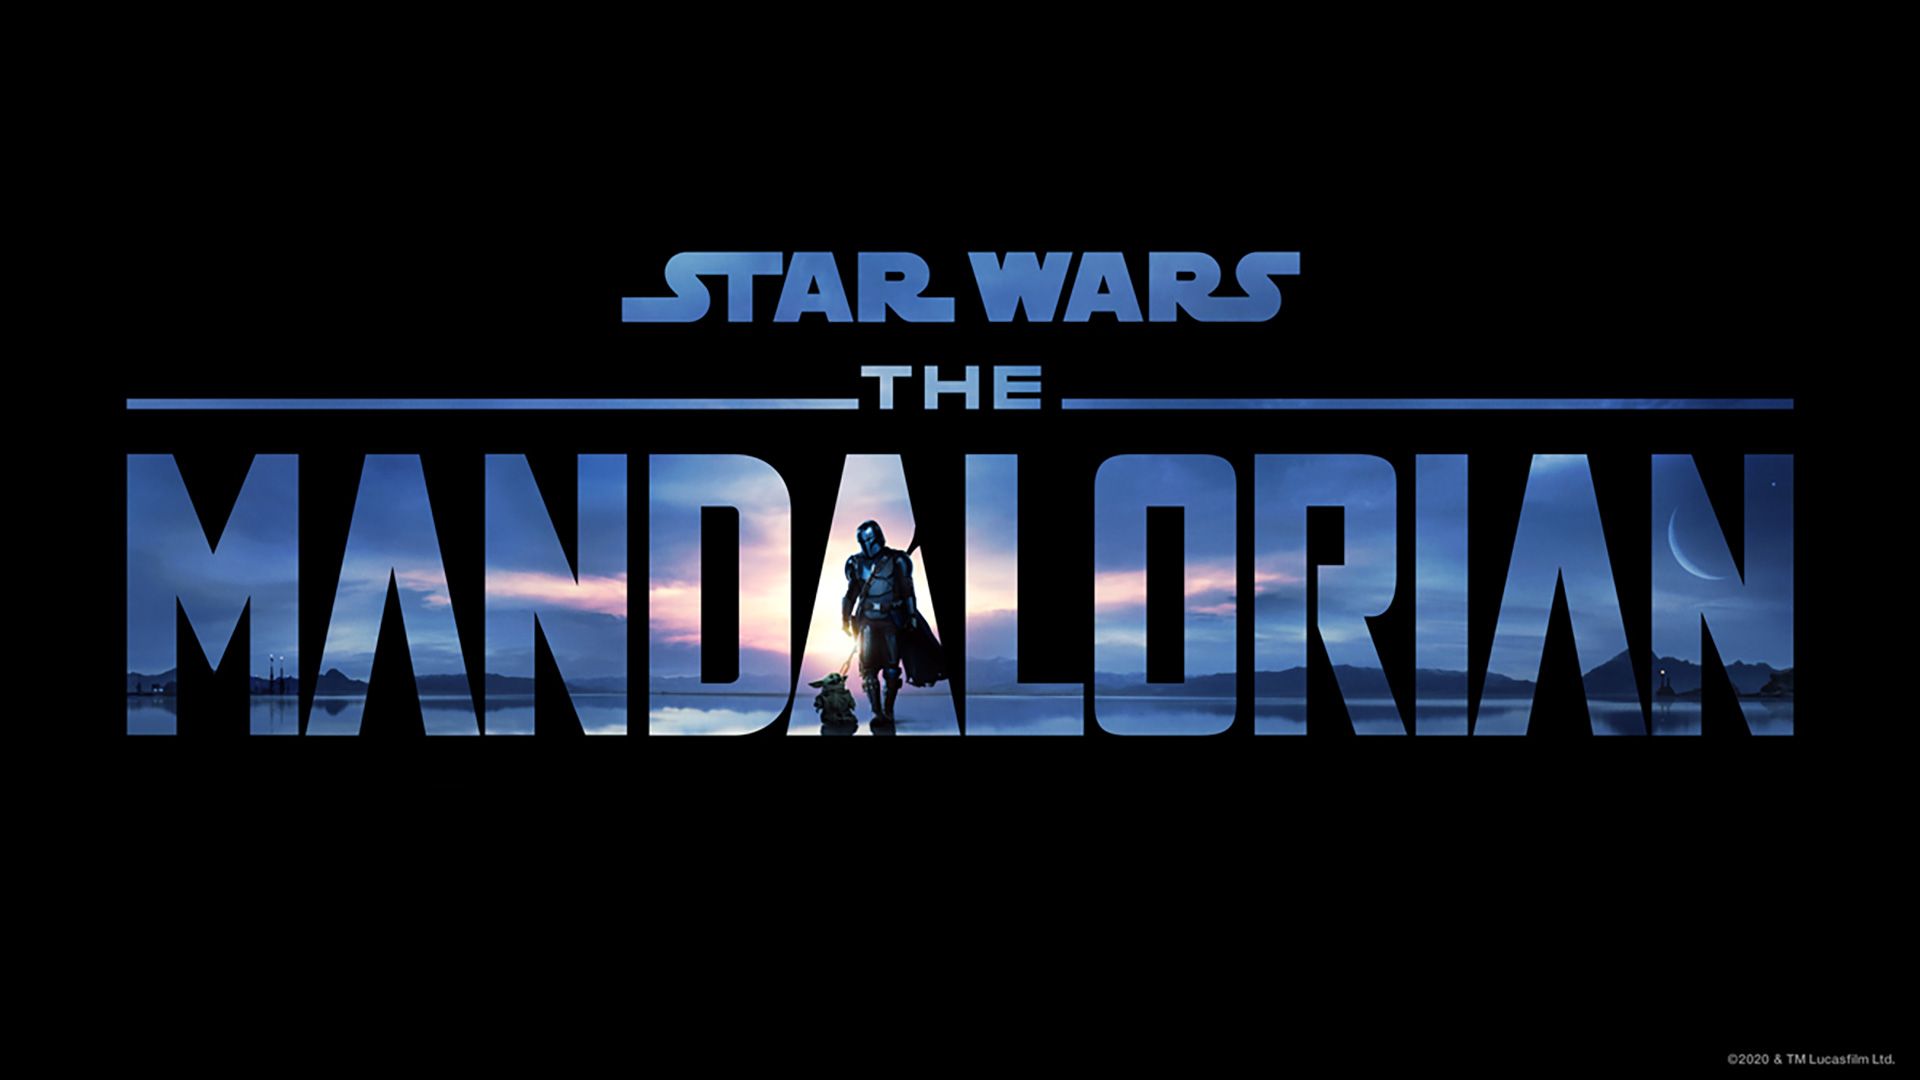 The Mandalorian season 2 release date is October 30